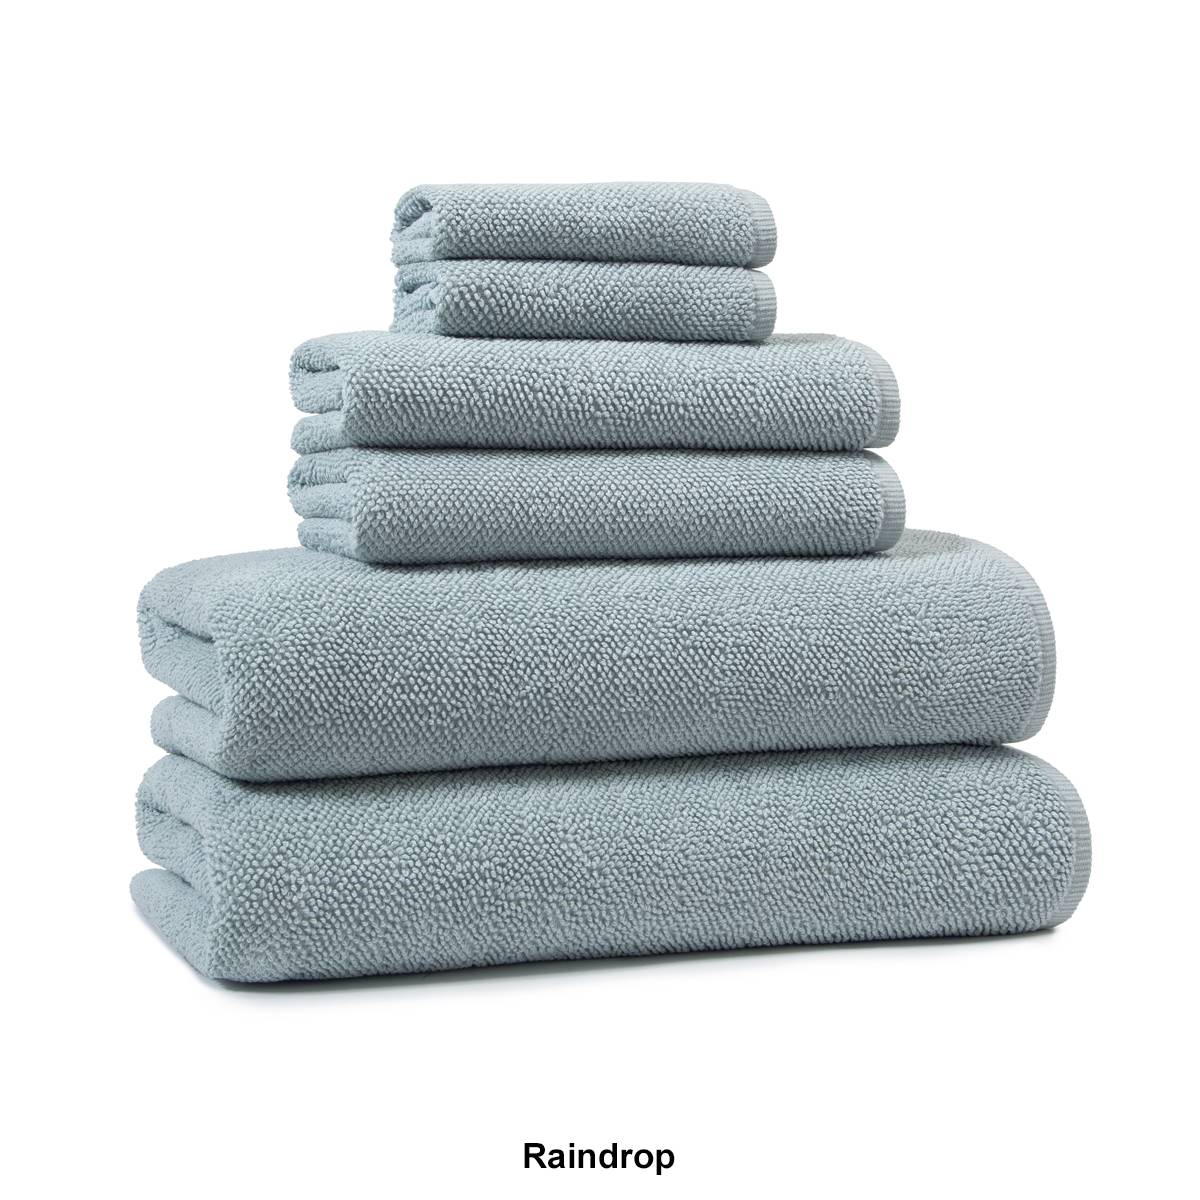 Cassadecor Venice Textured Bath Towel Collection